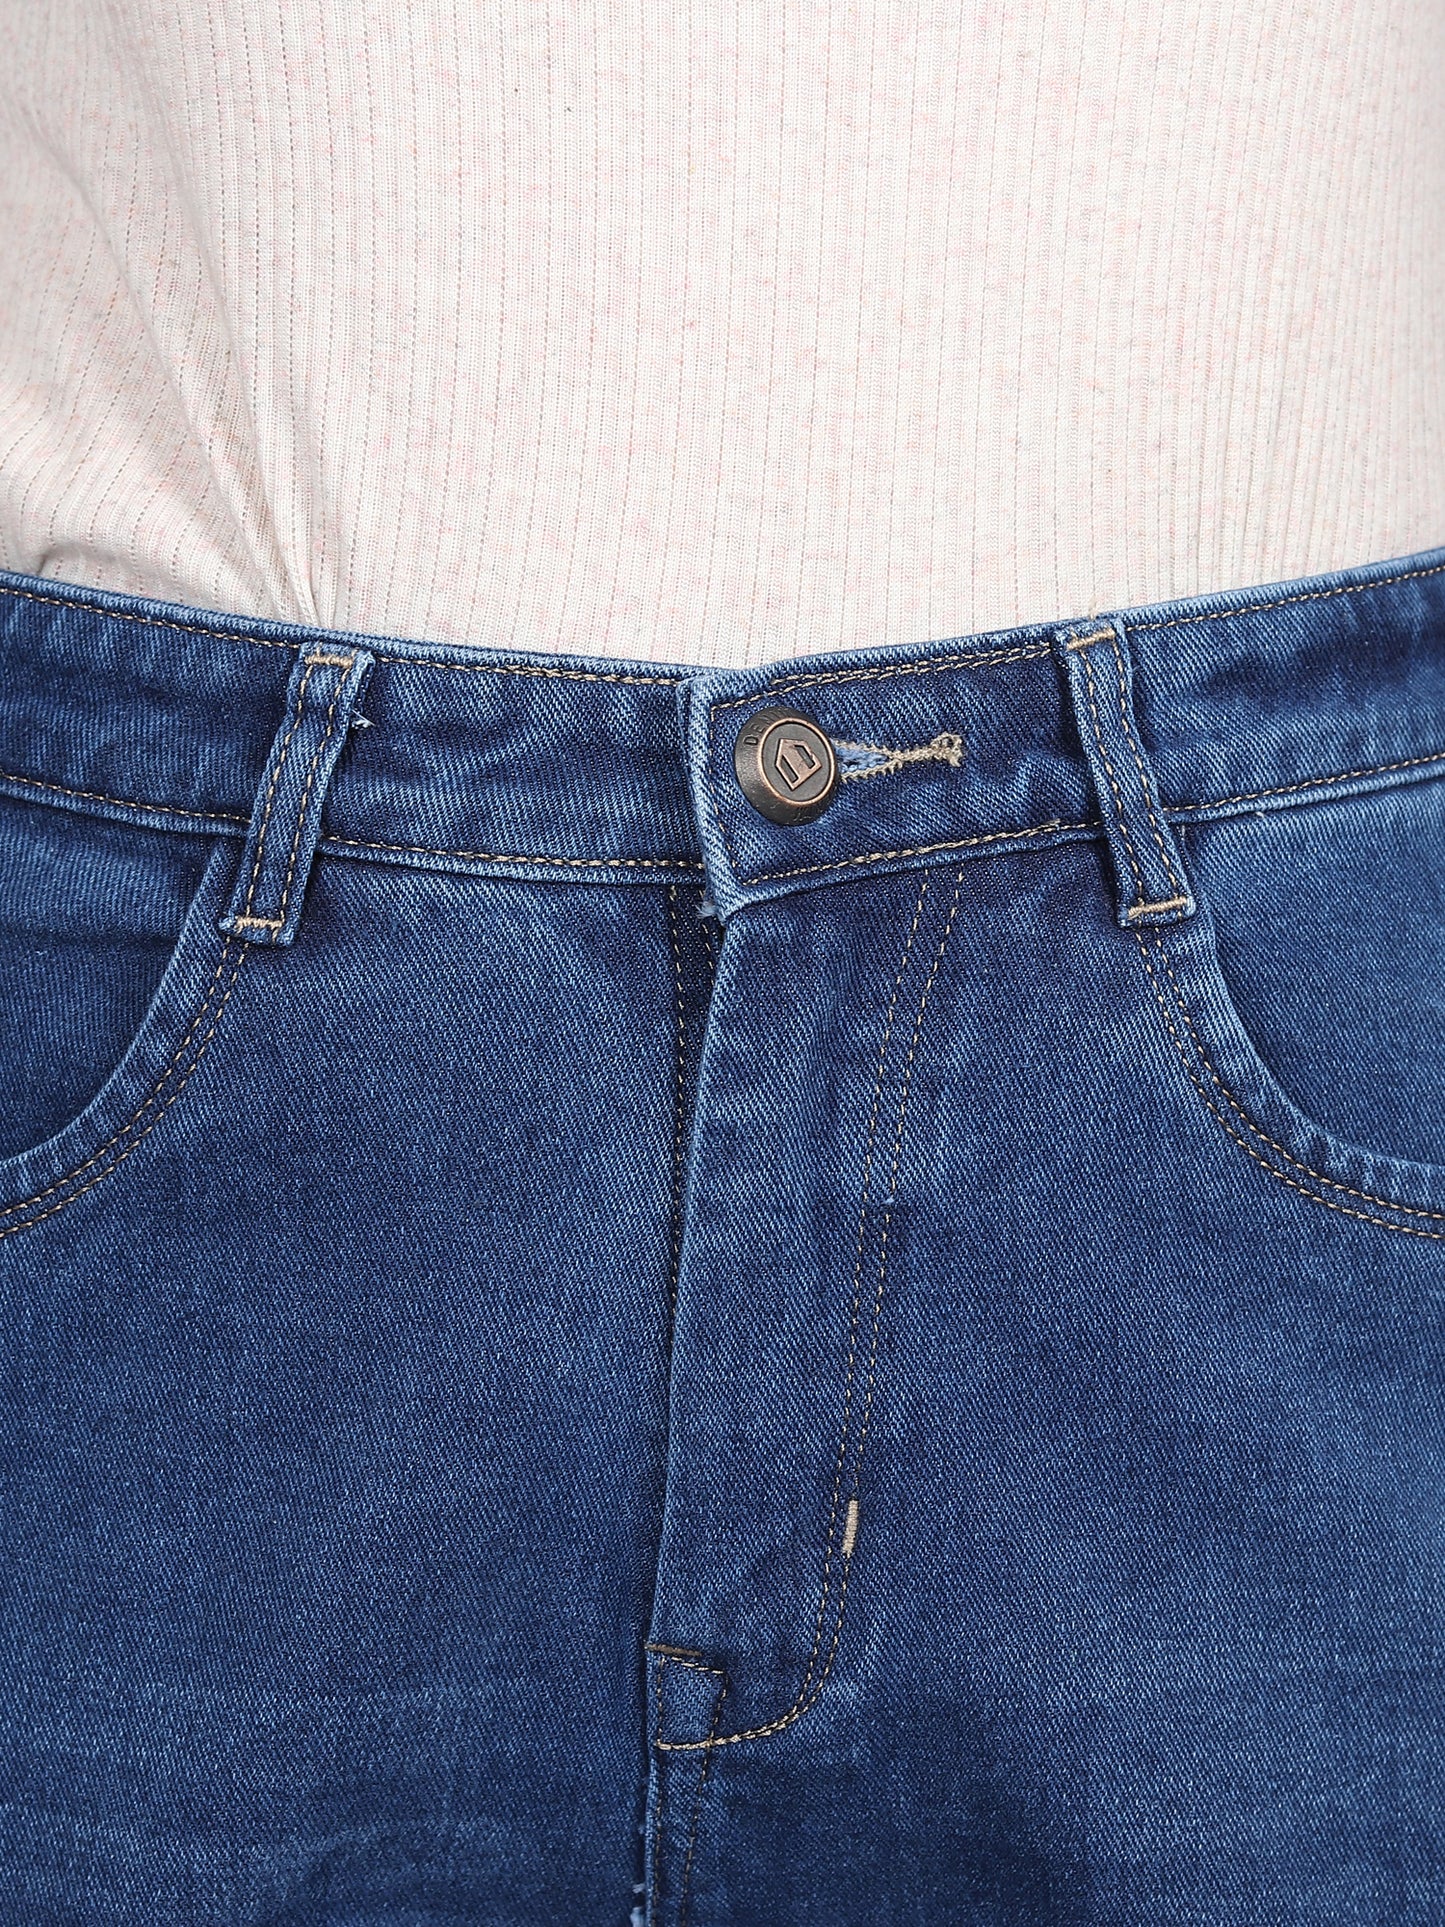 Blue Boyfriend Fit Cotton Lycra Regular Denim Jeans for Women-6041